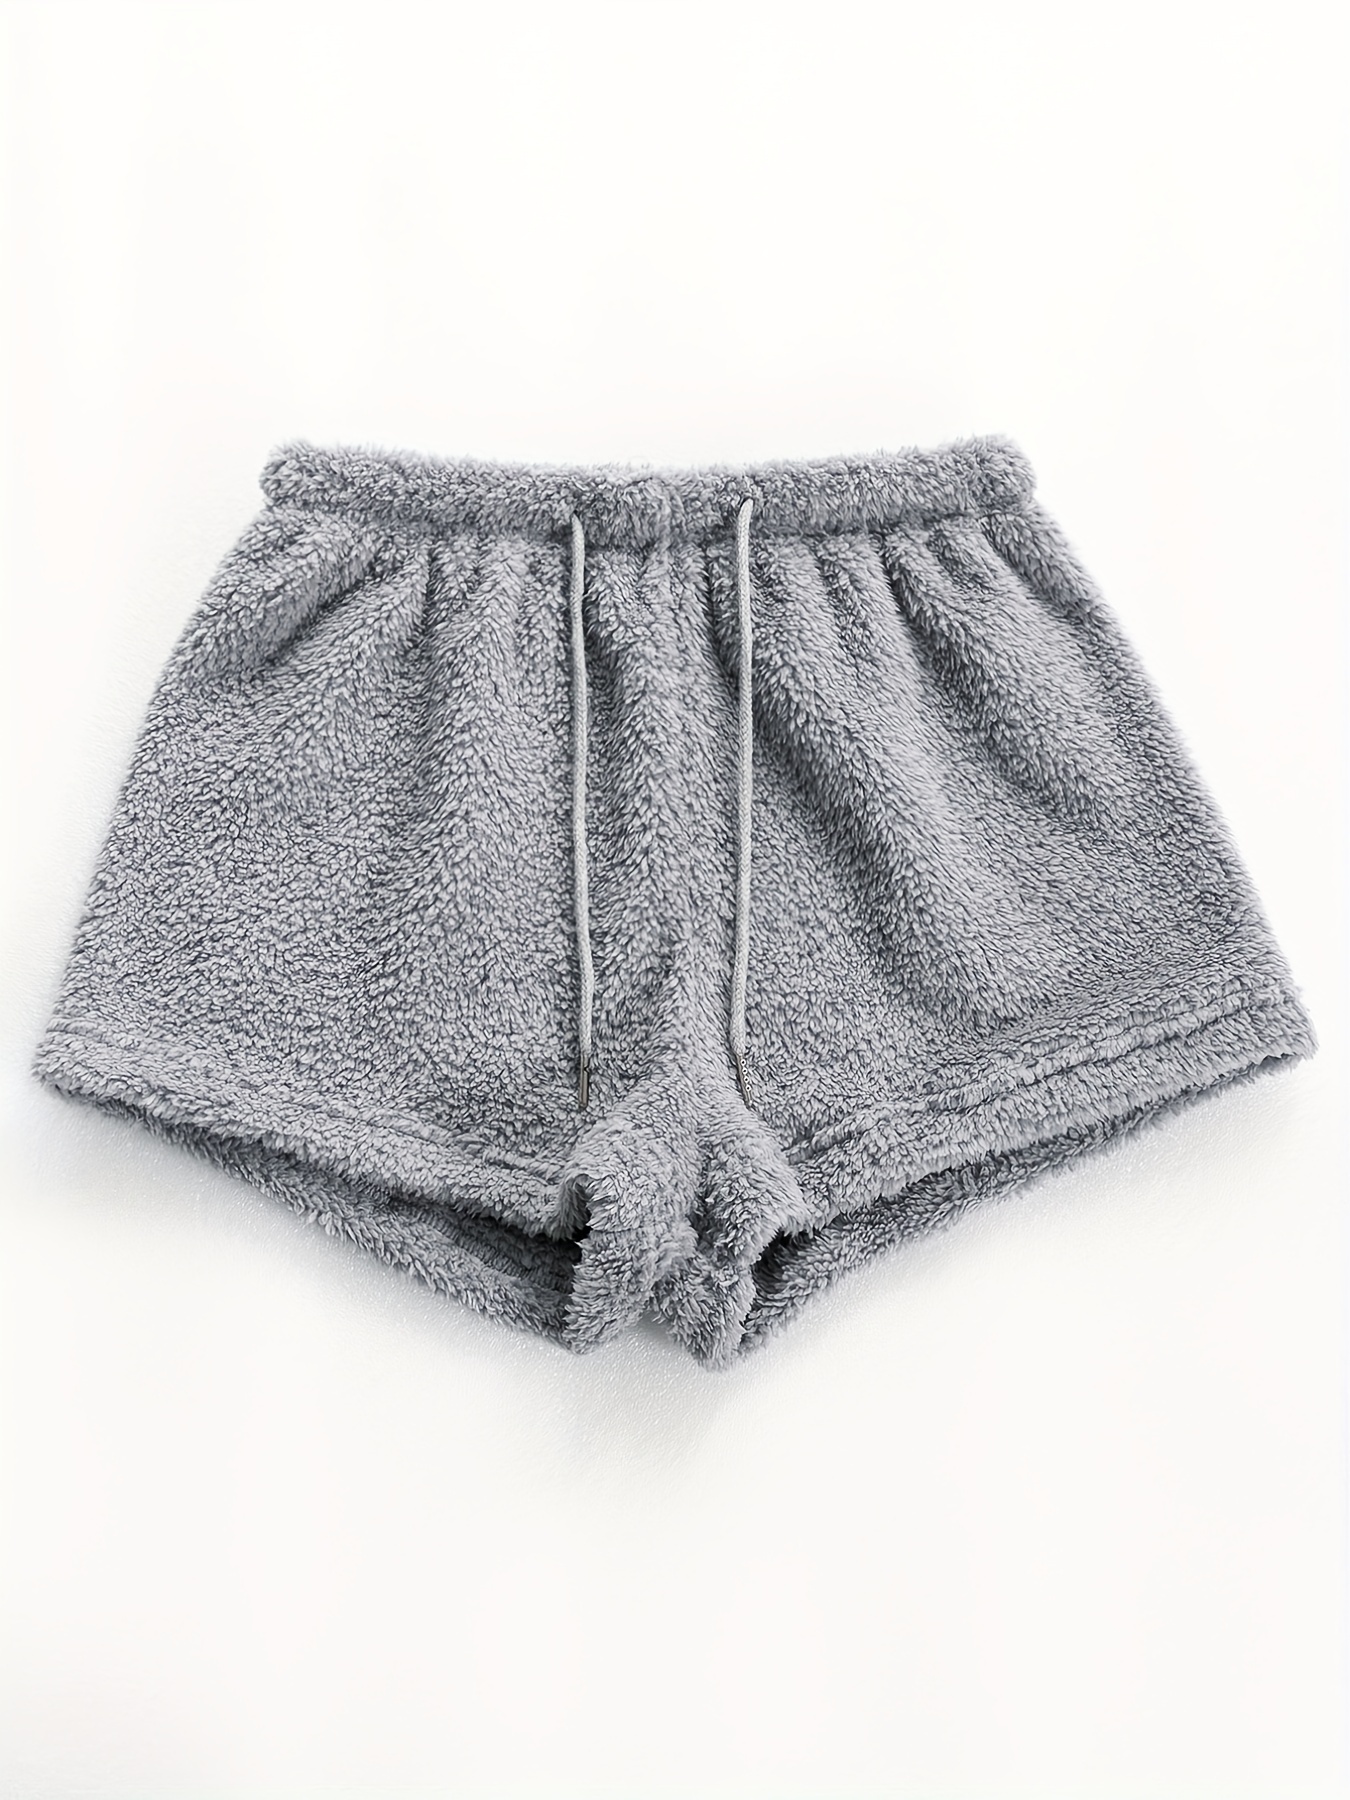 Nightwear  'Ash Grey' Herringbone Brushed Cotton Sleep Shorts